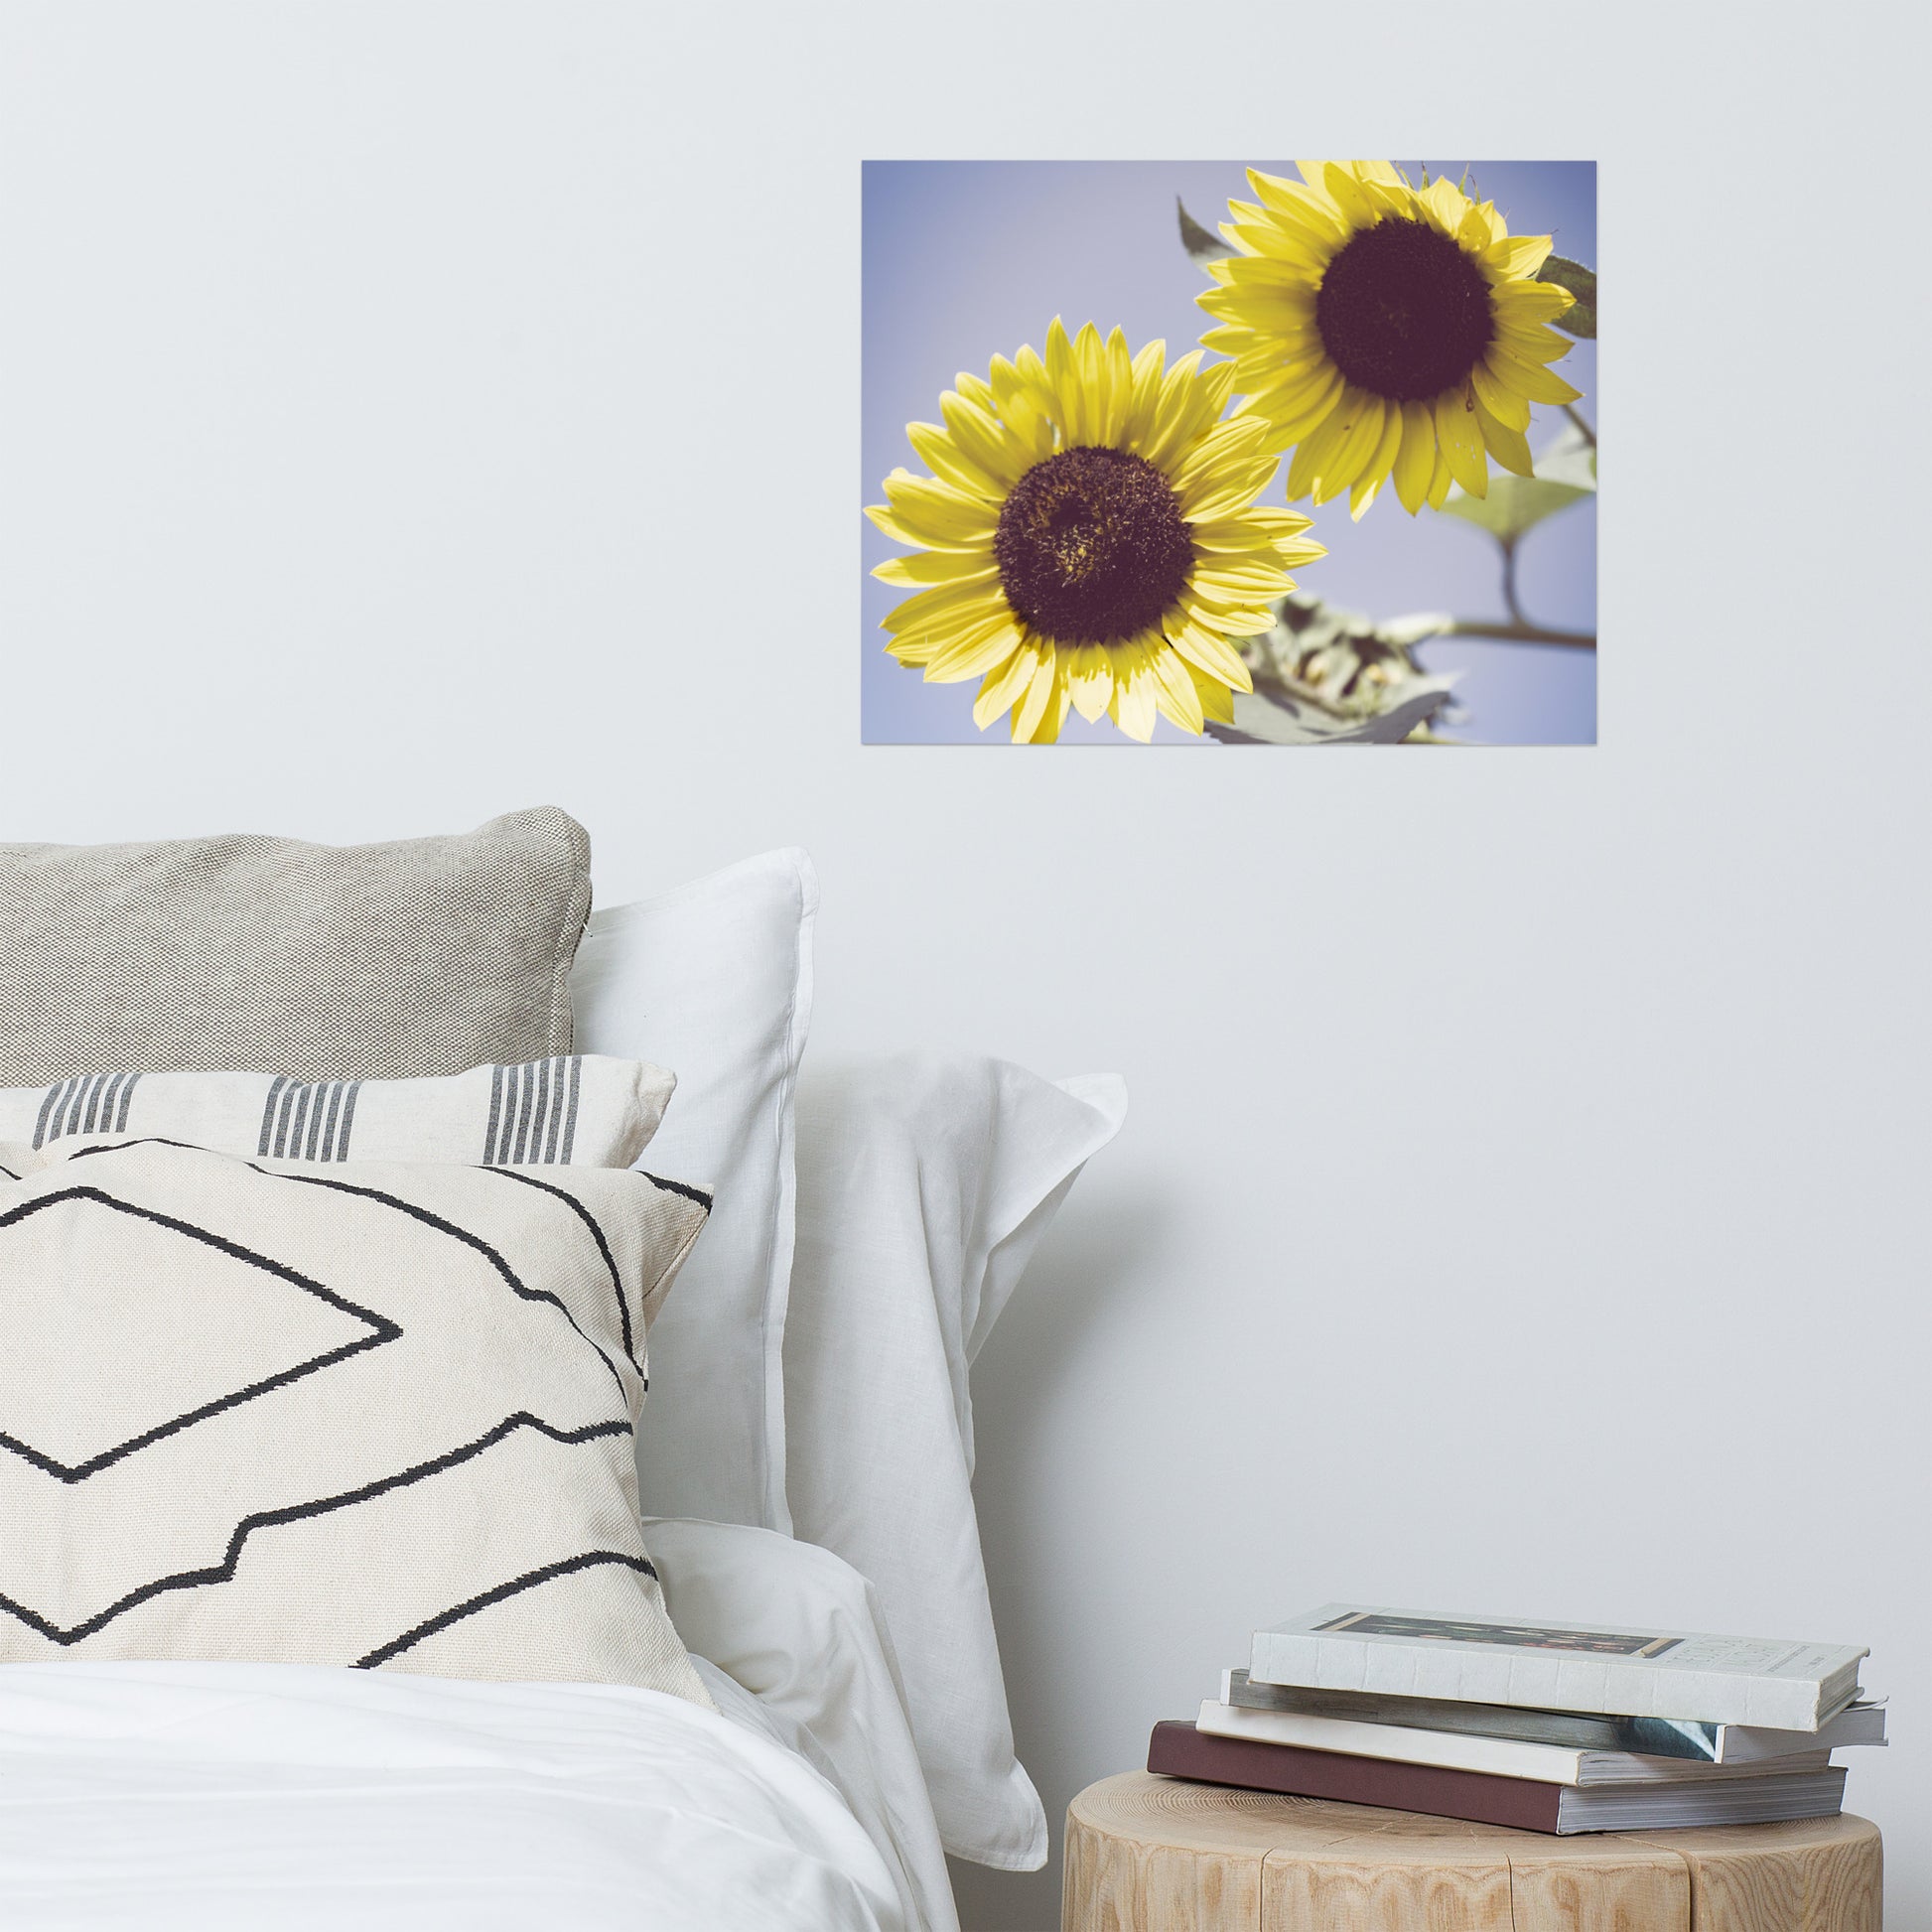 Minimalist Flower Print: Aged Sunflowers Against Sky - Botanical / Floral / Flora / Flowers / Nature Photograph Loose / Unframed / Frameable / Frameless Wall Art Print - Artwork